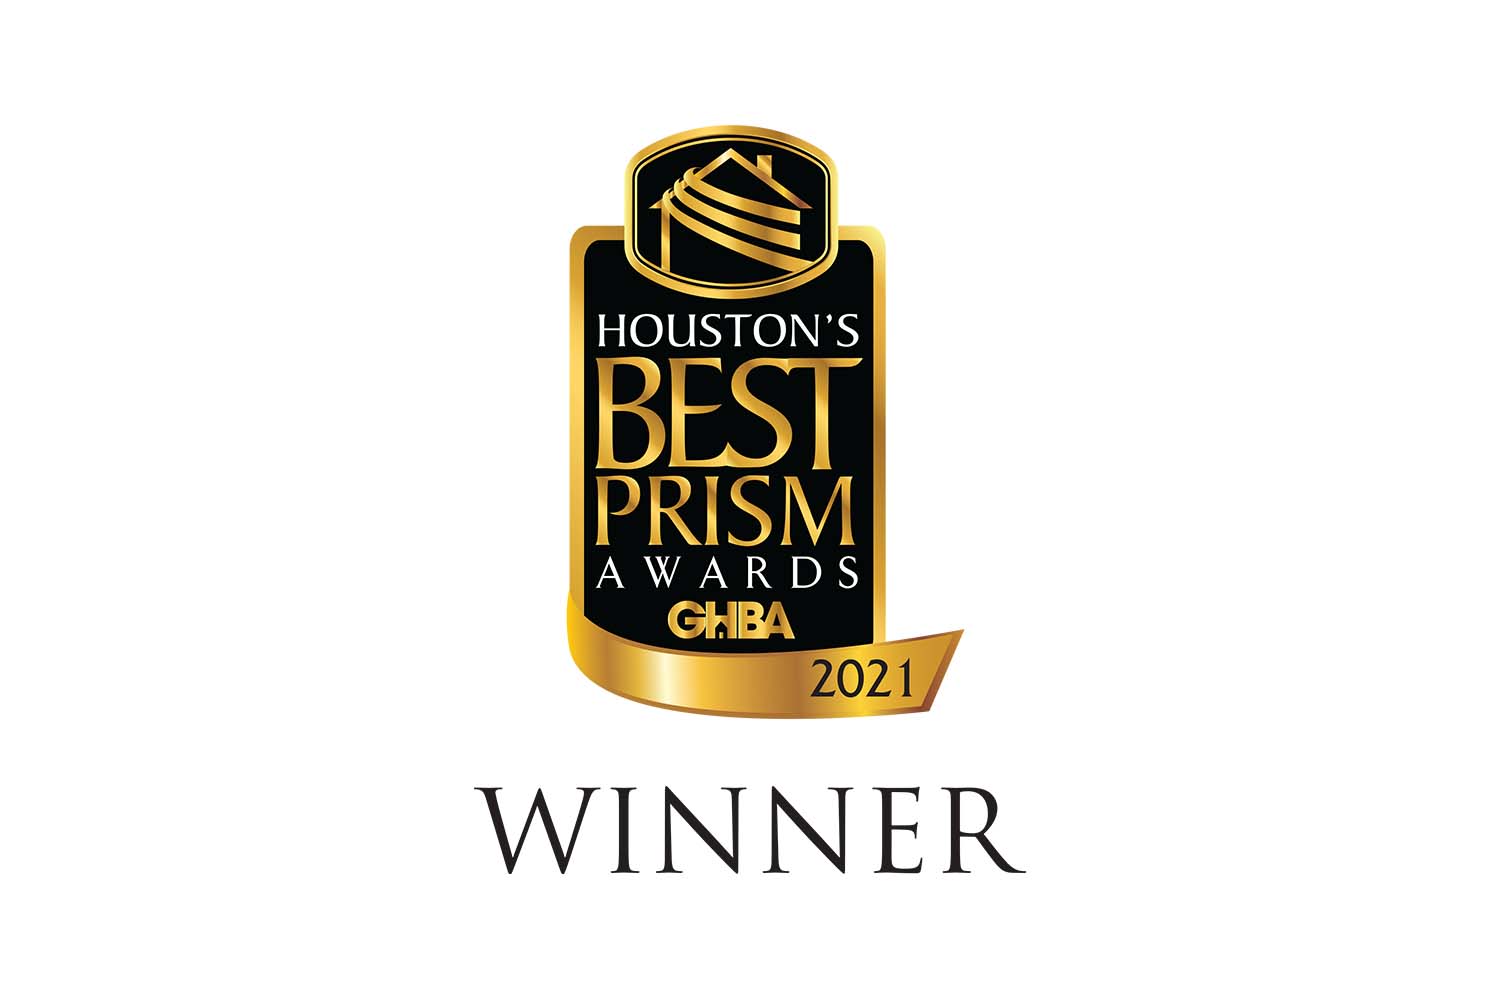 GHBA PRISM AWARDS